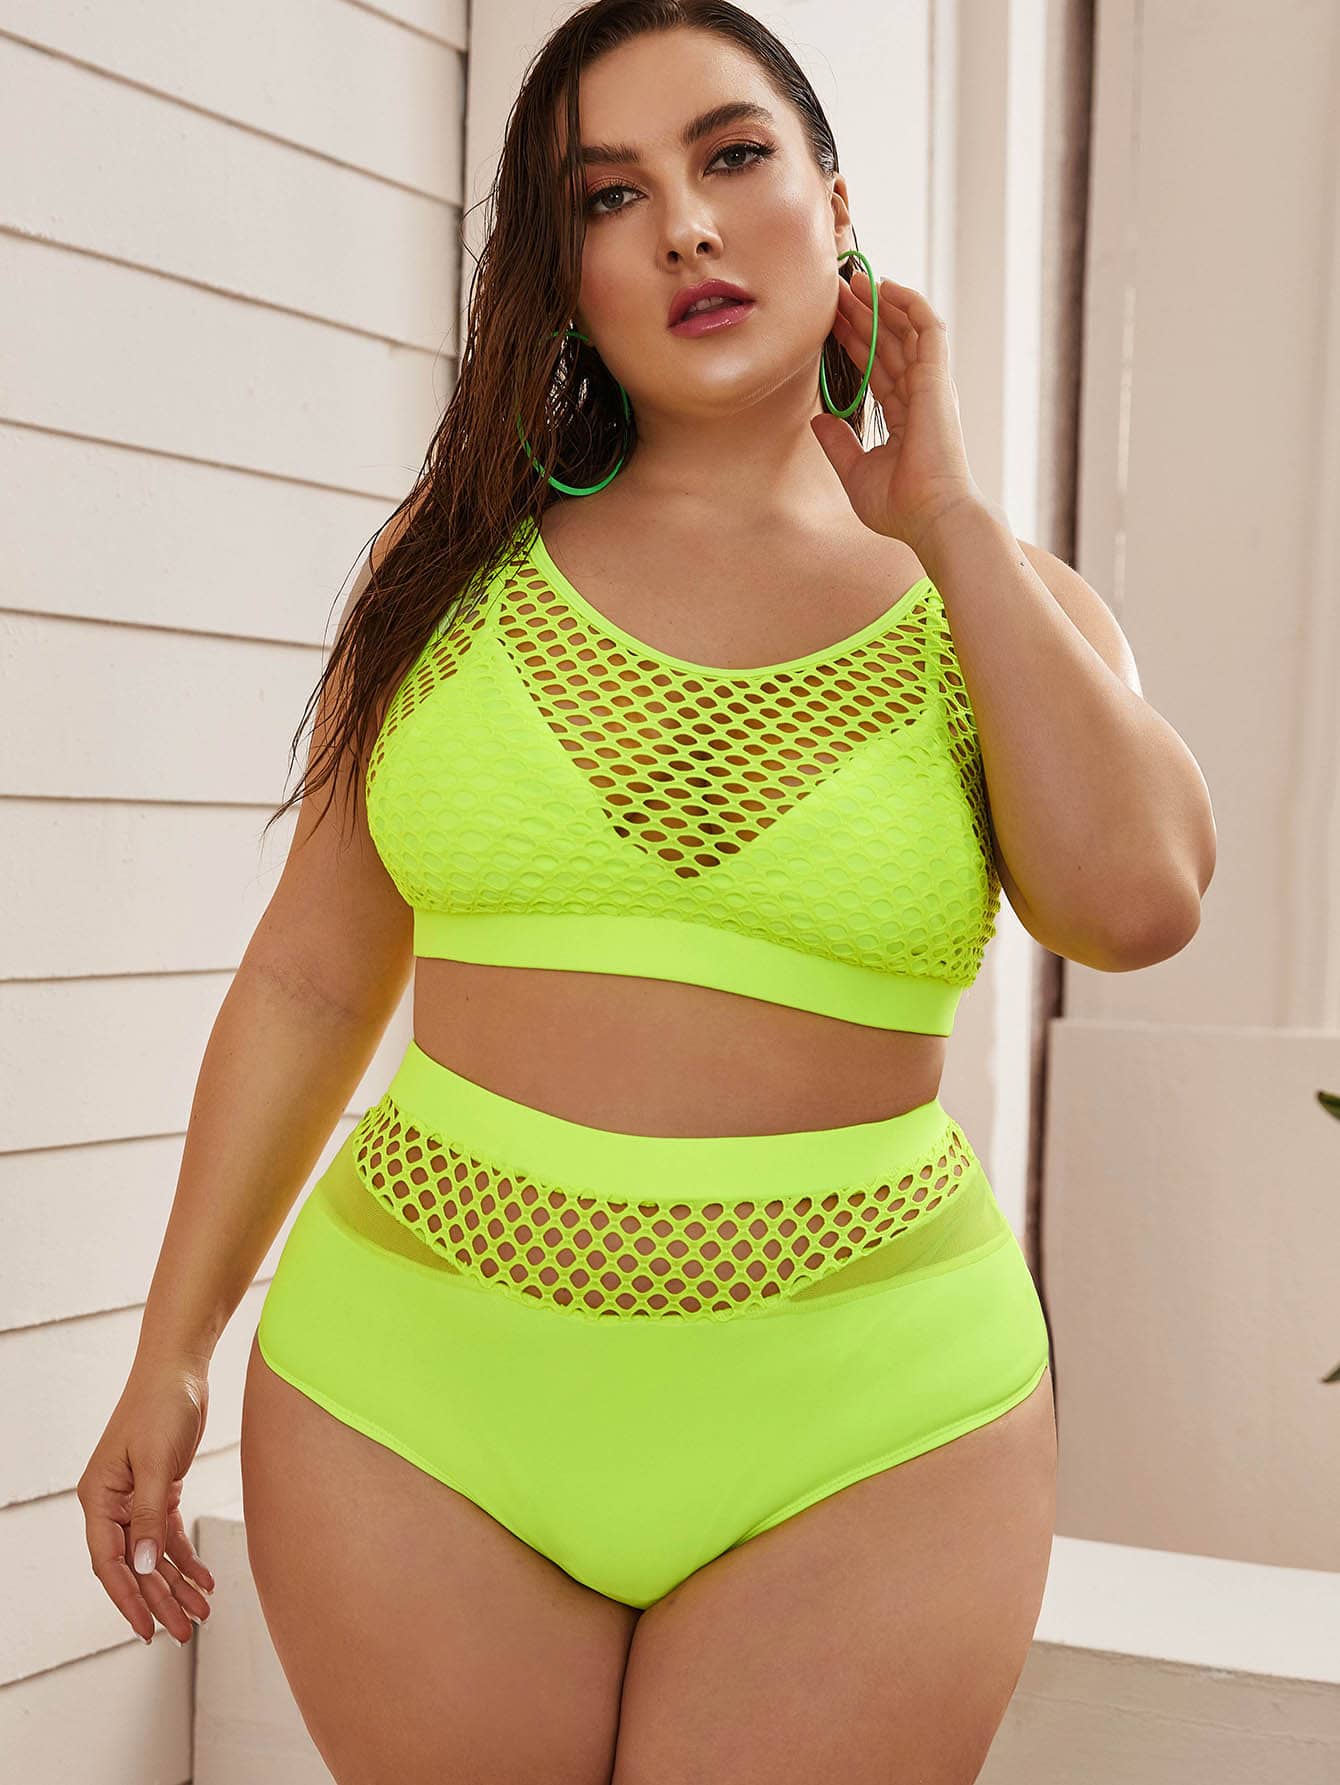 Summer Beach Plus Neon Green Fishnet Overlay Bikini Set Cami Top & High Waisted Bottom 2 Piece Bathing Suit